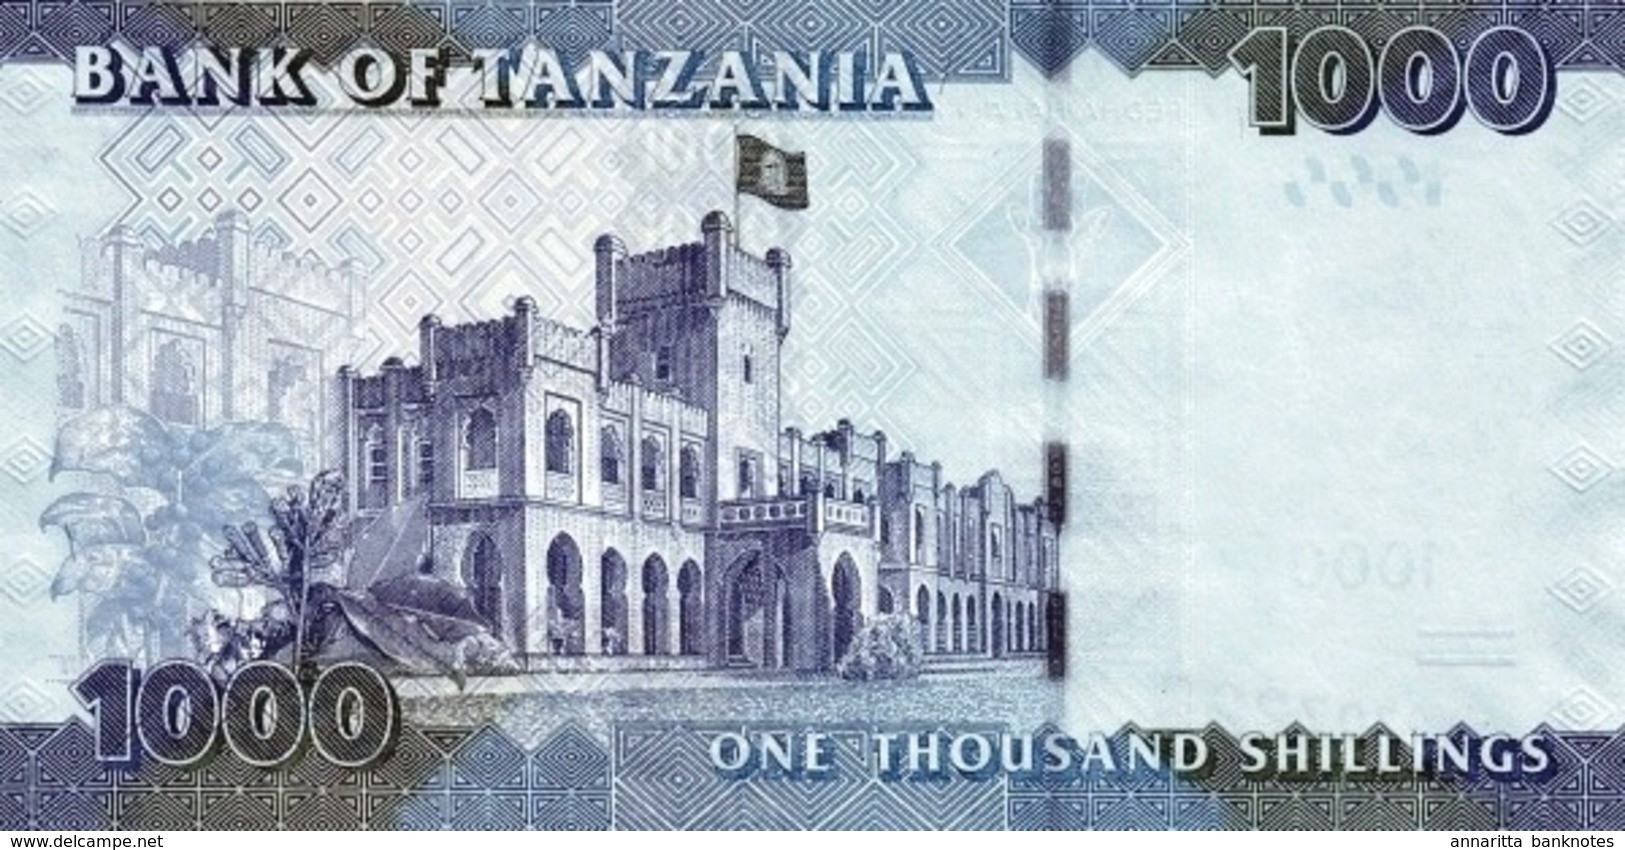 Tanzania (BOT) 1000 Shillings ND (2011) UNC Cat No. P-41a / TZ140a - Tanzanie